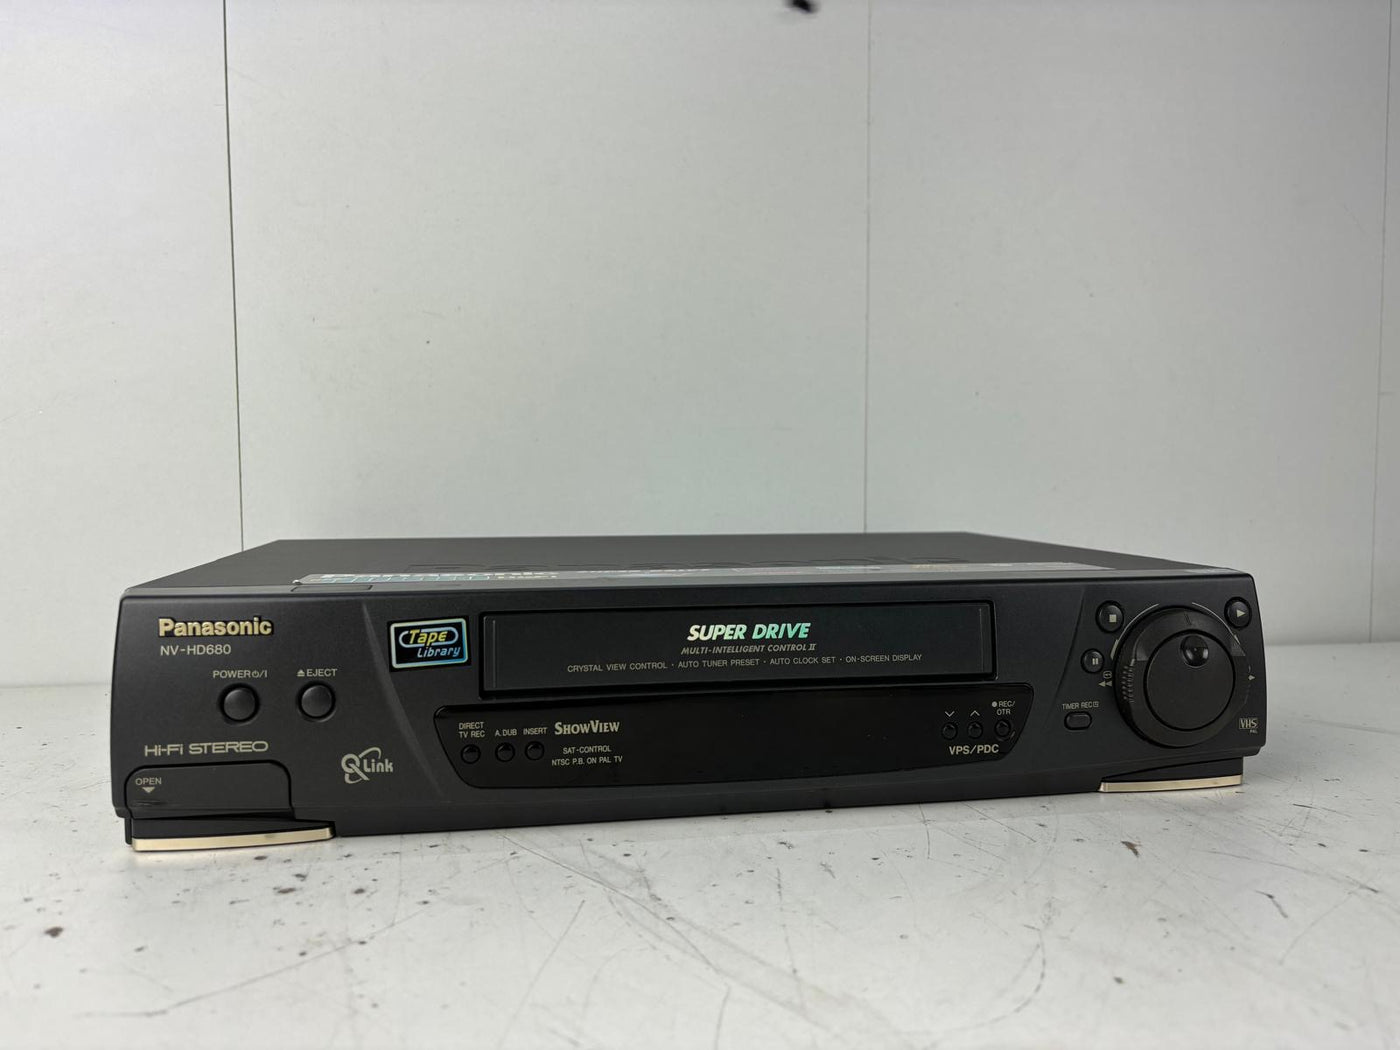 Panasonic NV-HD680 Super Drive Video Cassette Recorder